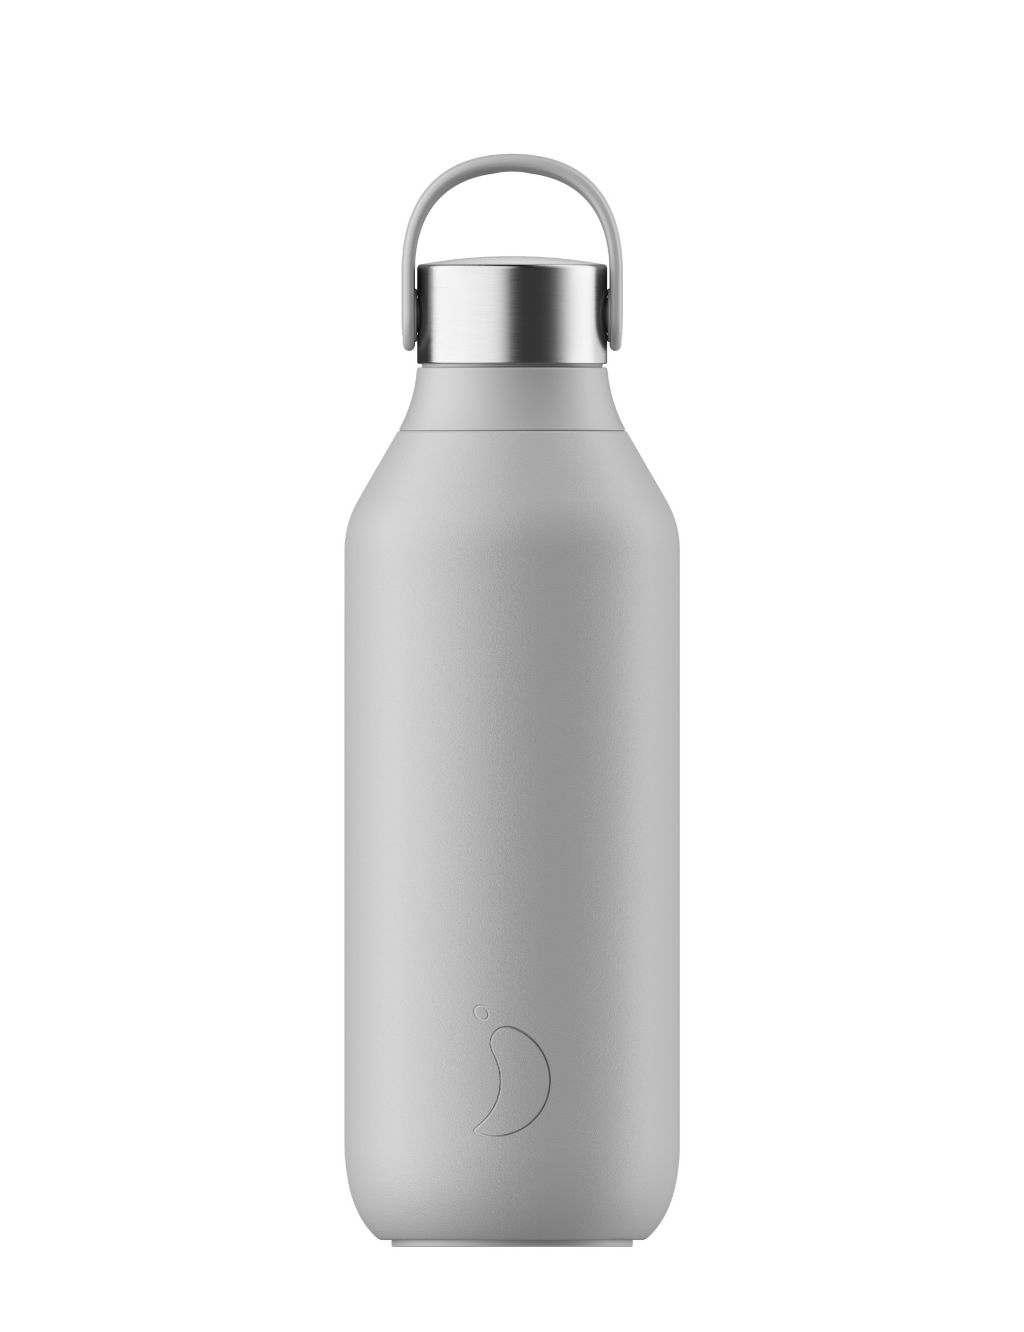 Series 2 Water Bottle image 1